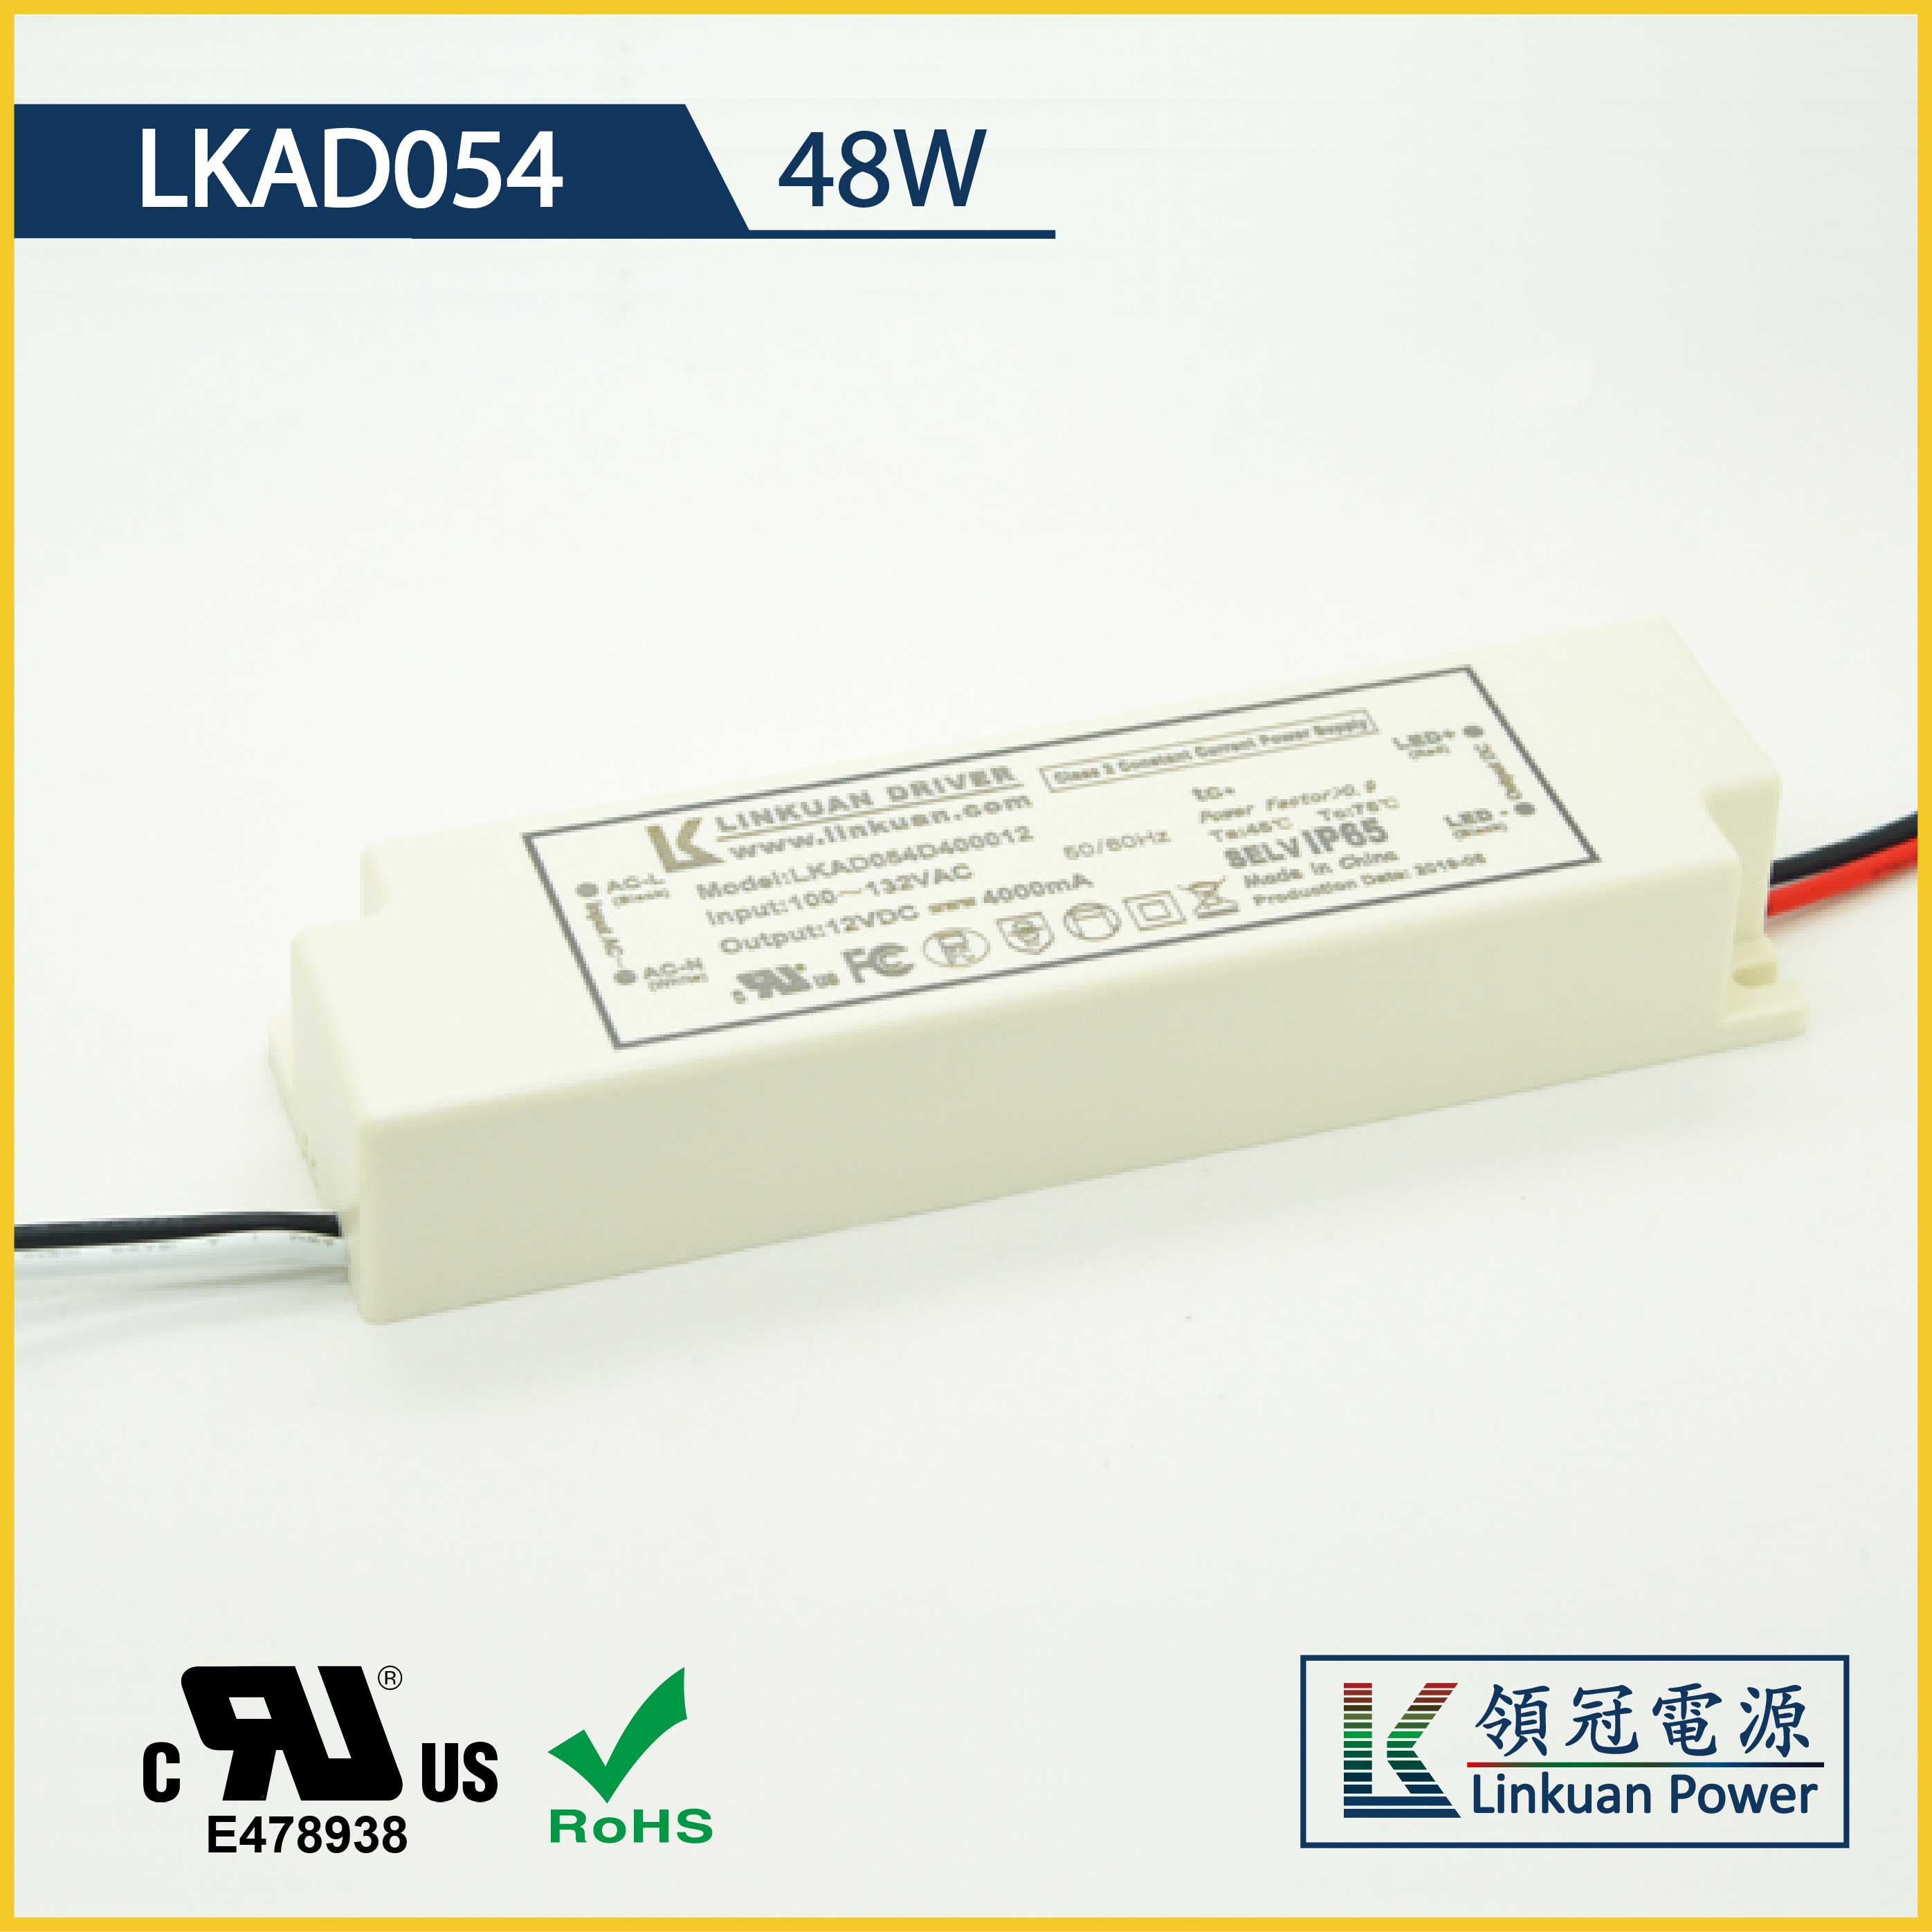 LKAD054D 48W Constant Voltage 12/24V 4A/2A Triac Dimming LED drivers